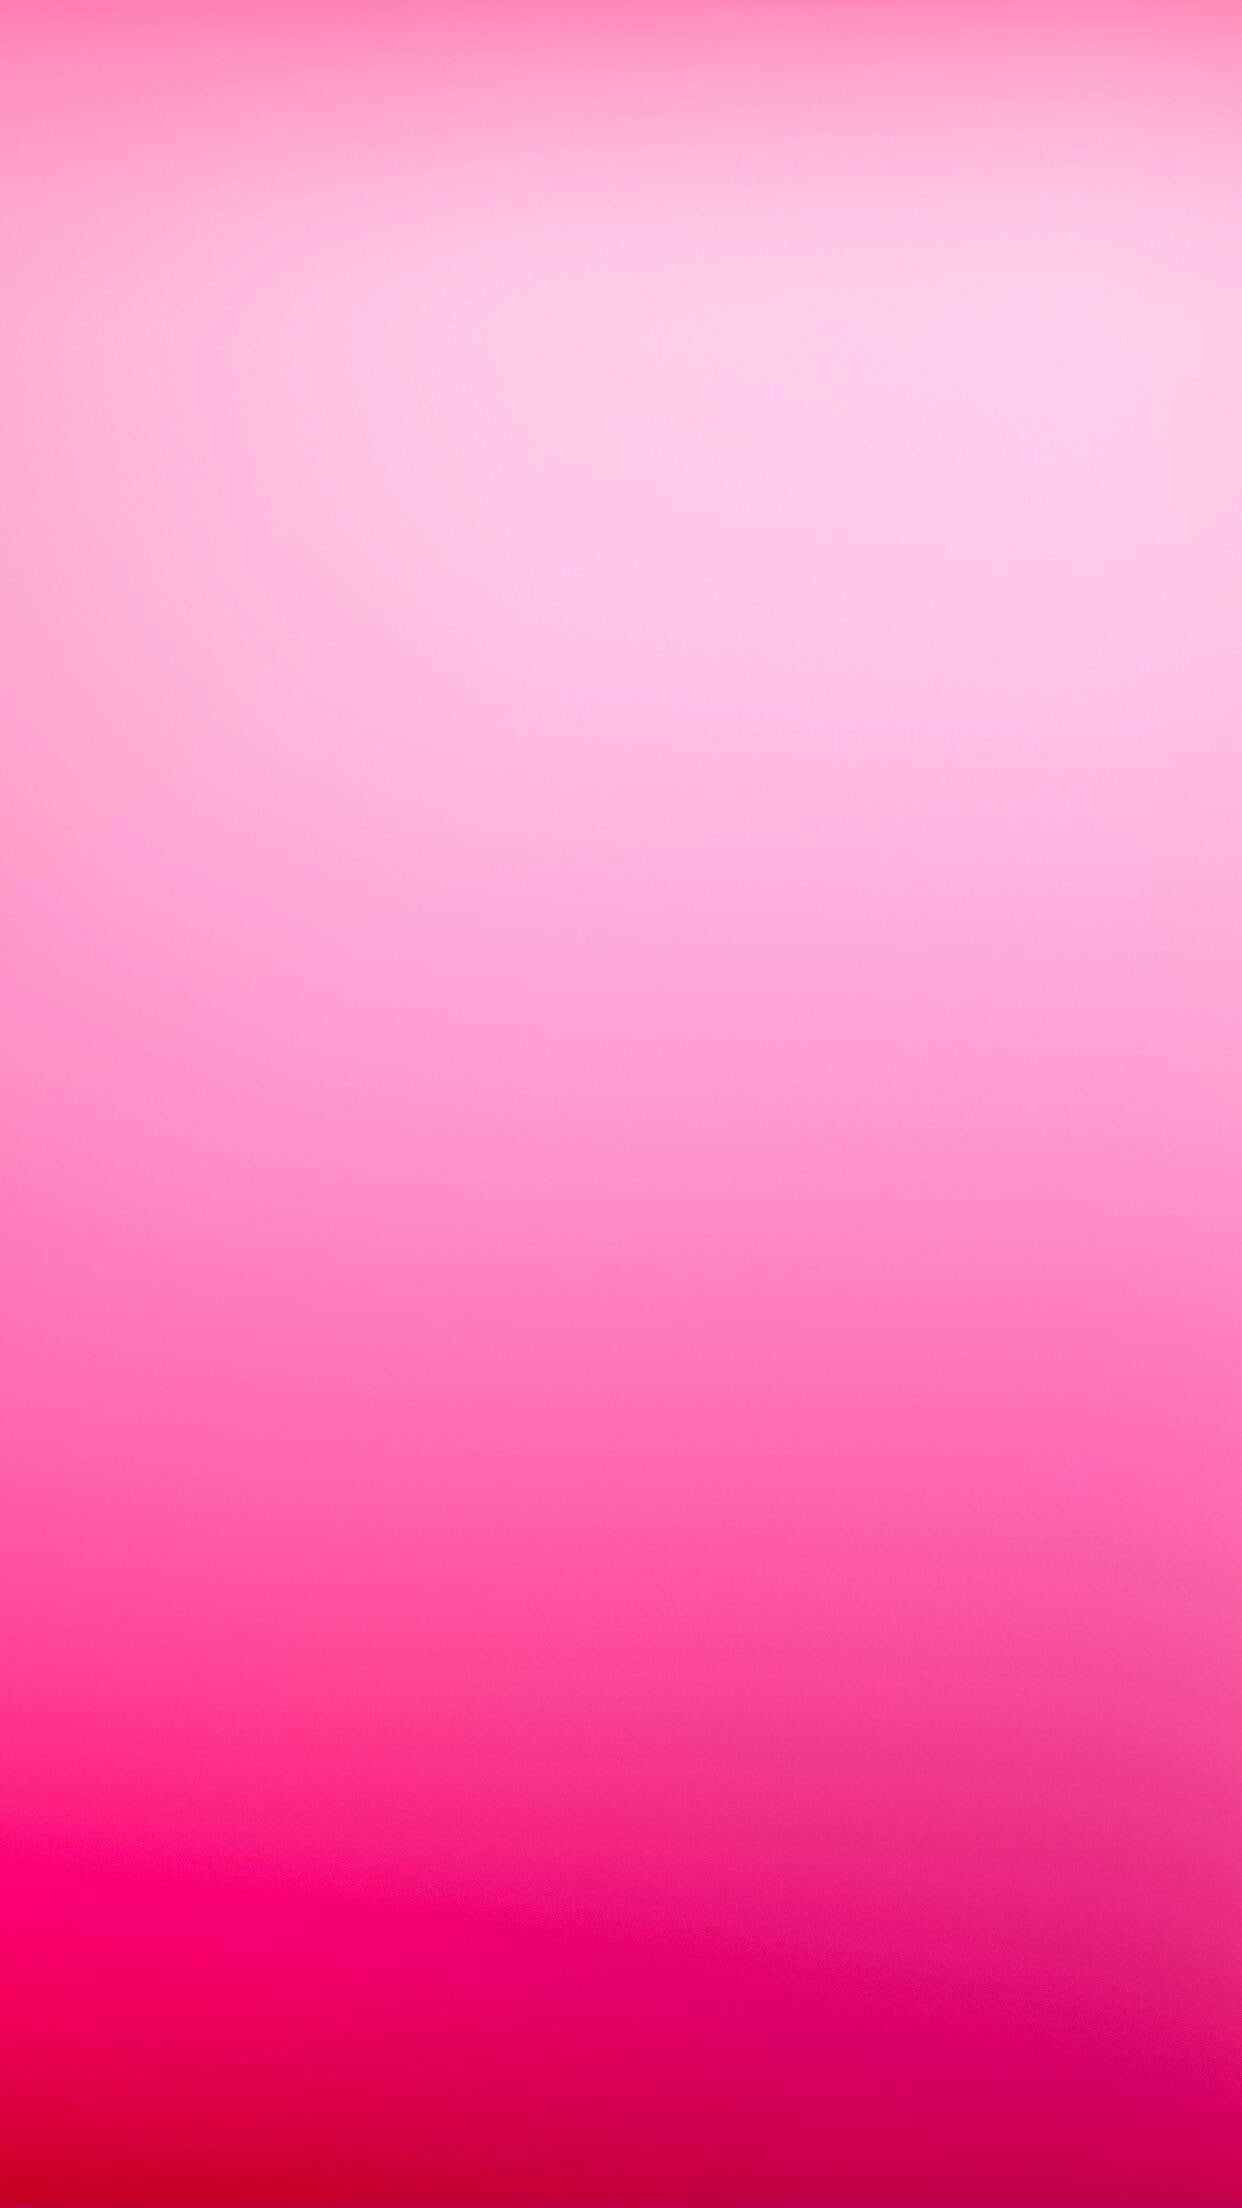 blurred, colorful, vertical, portrait display, pink color, backgrounds